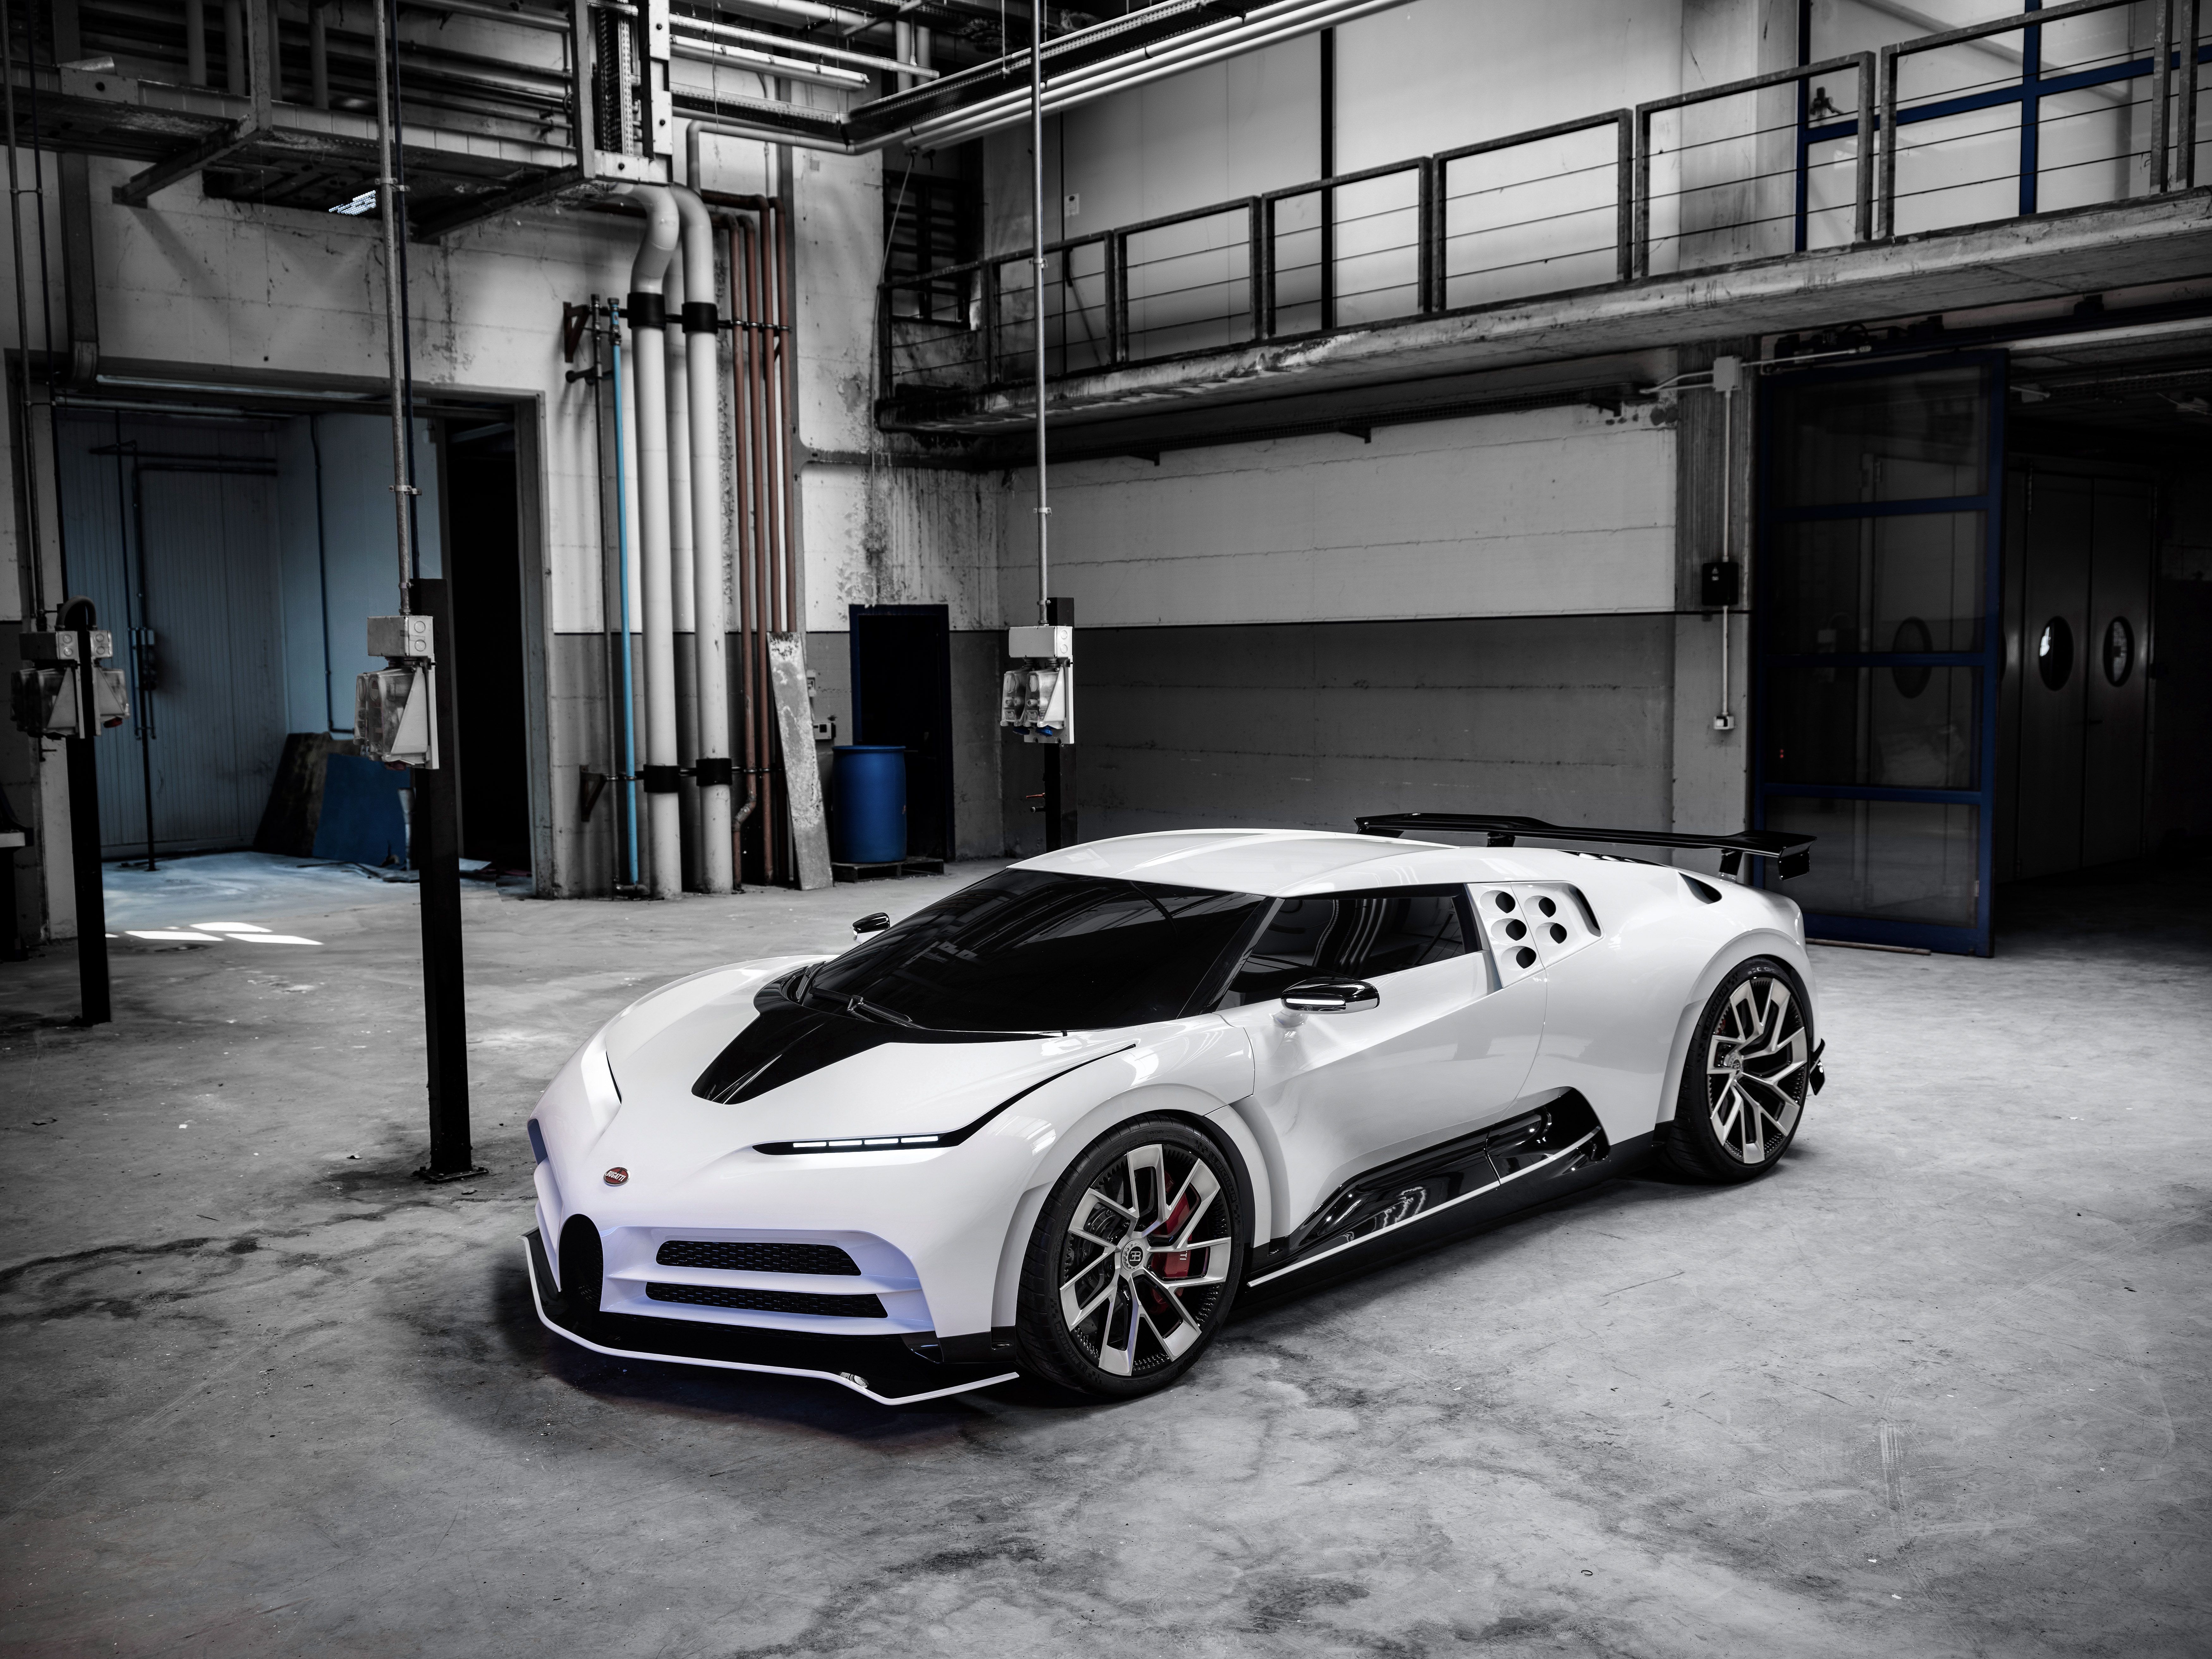 2019 Bugatti Morphed The Legendary EB110 Into A New Century With the Stuningly White 2020 Bugatti Centodieci